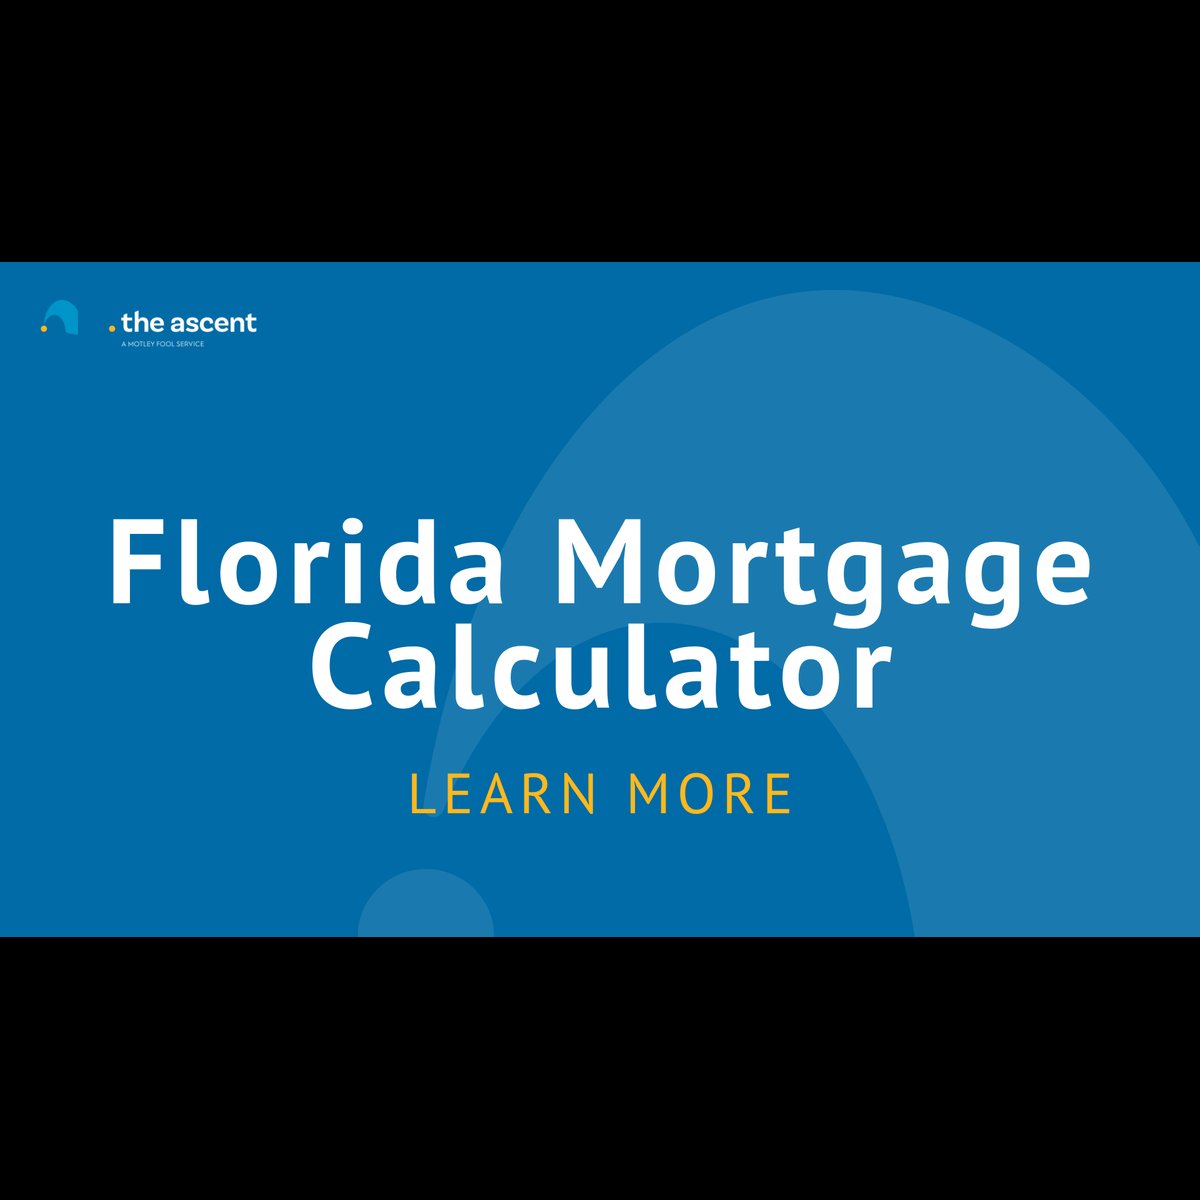 tarde siga adelante fertilizante Florida Mortgage Calculator | The Ascent